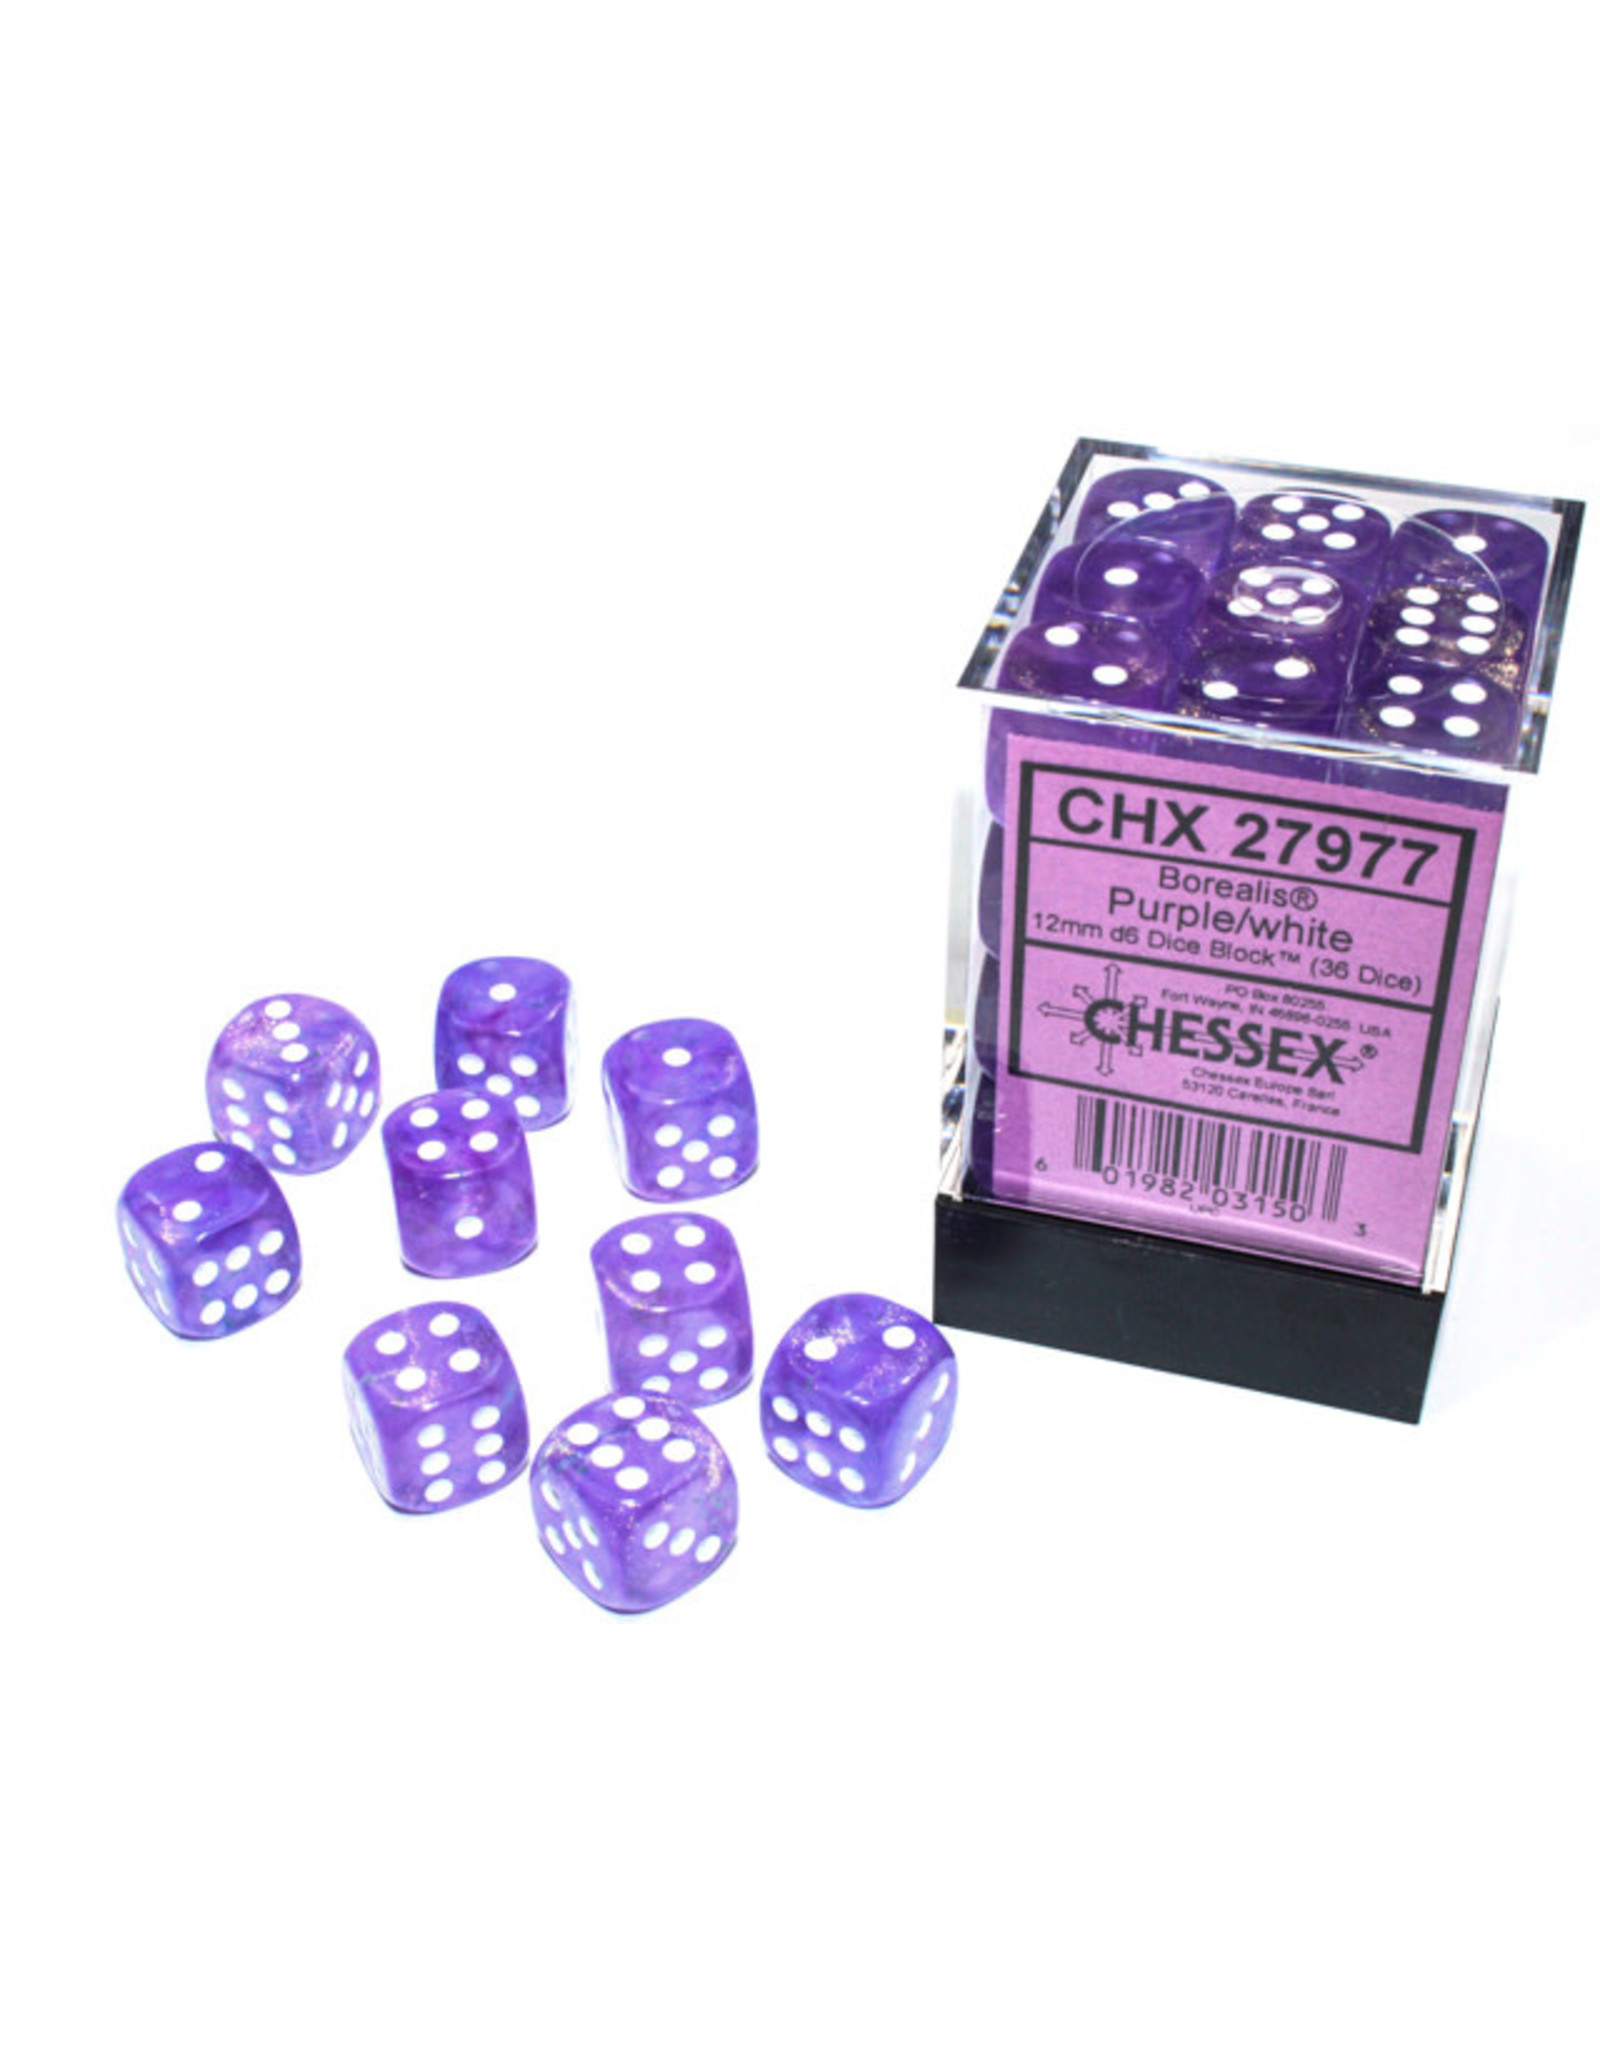 Chessex Borealis: 12mm d6 Purple/white Luminary Dice Block (36 dice) CHX 27977